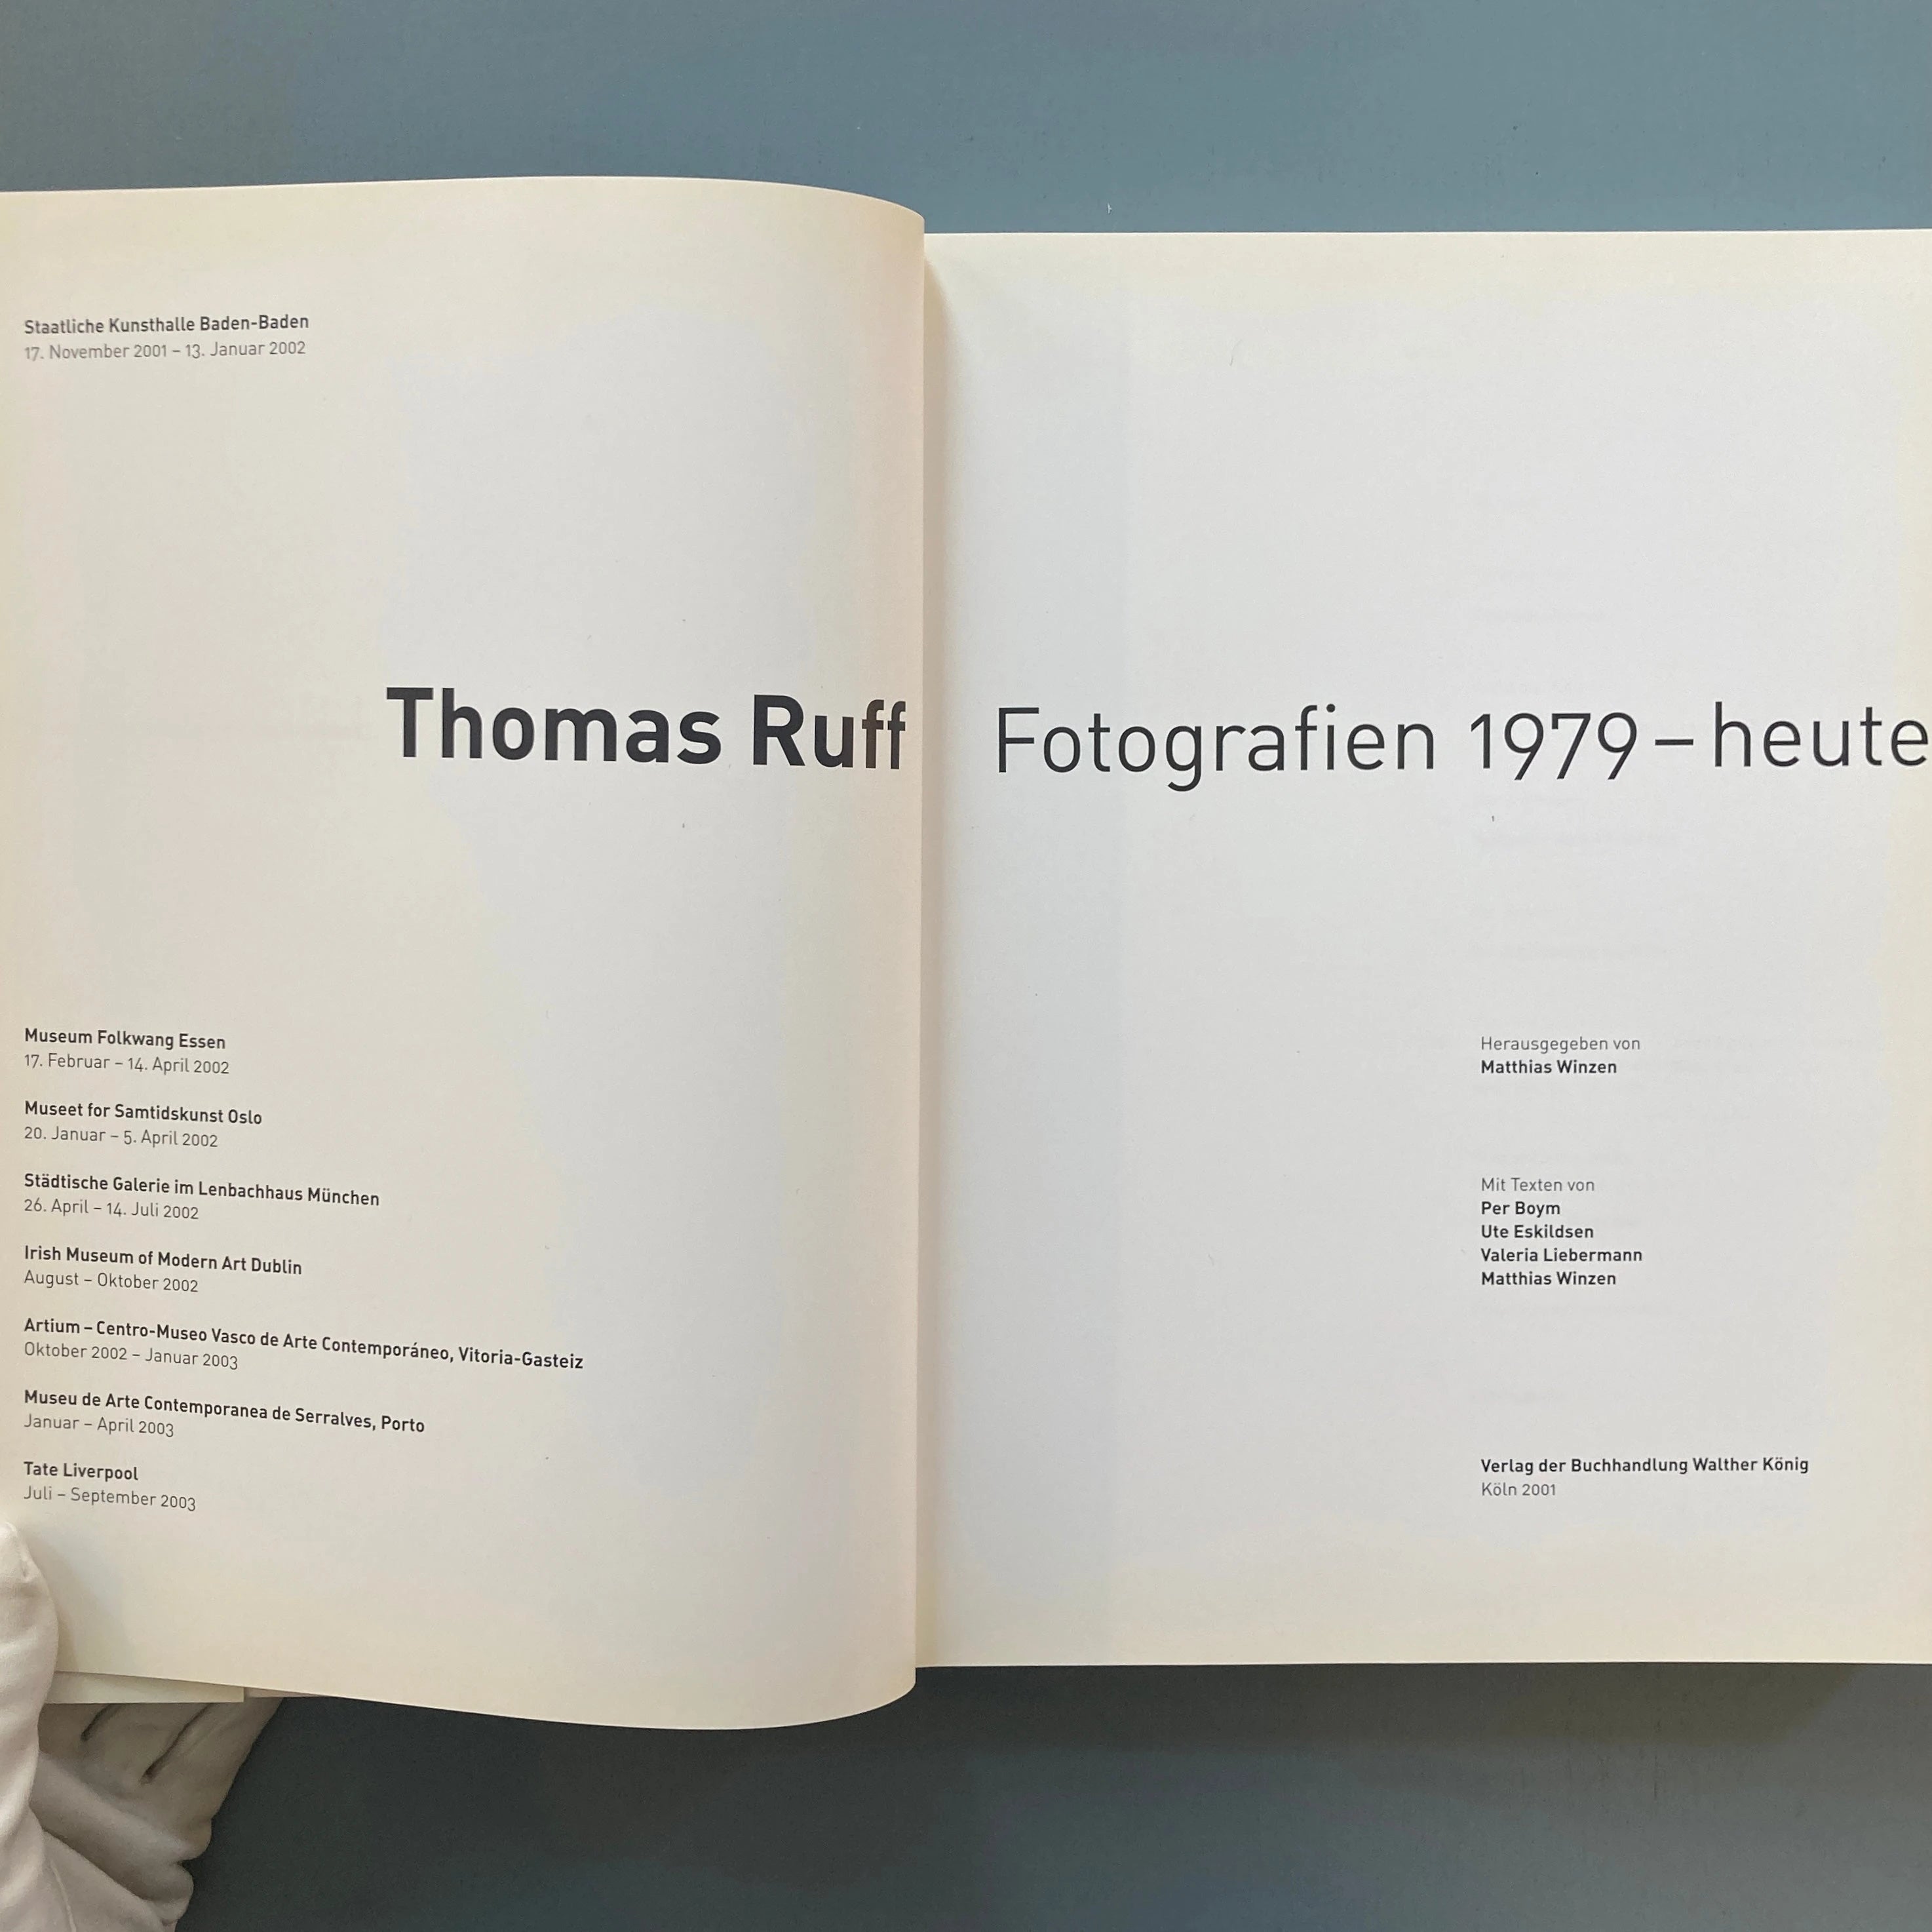 Thomas Ruff - Fotografien 1979-heute - König 2001 - Saint-Martin 